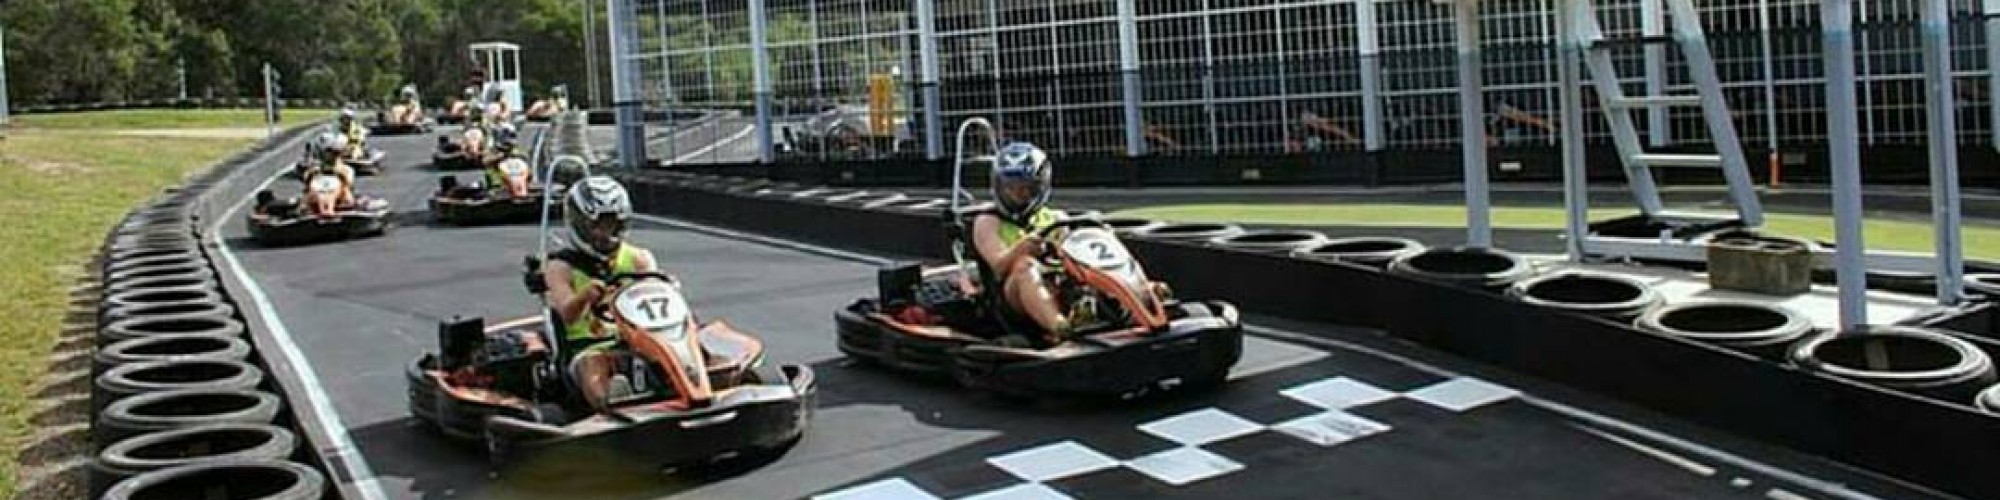 Slideways Go Karting Australia